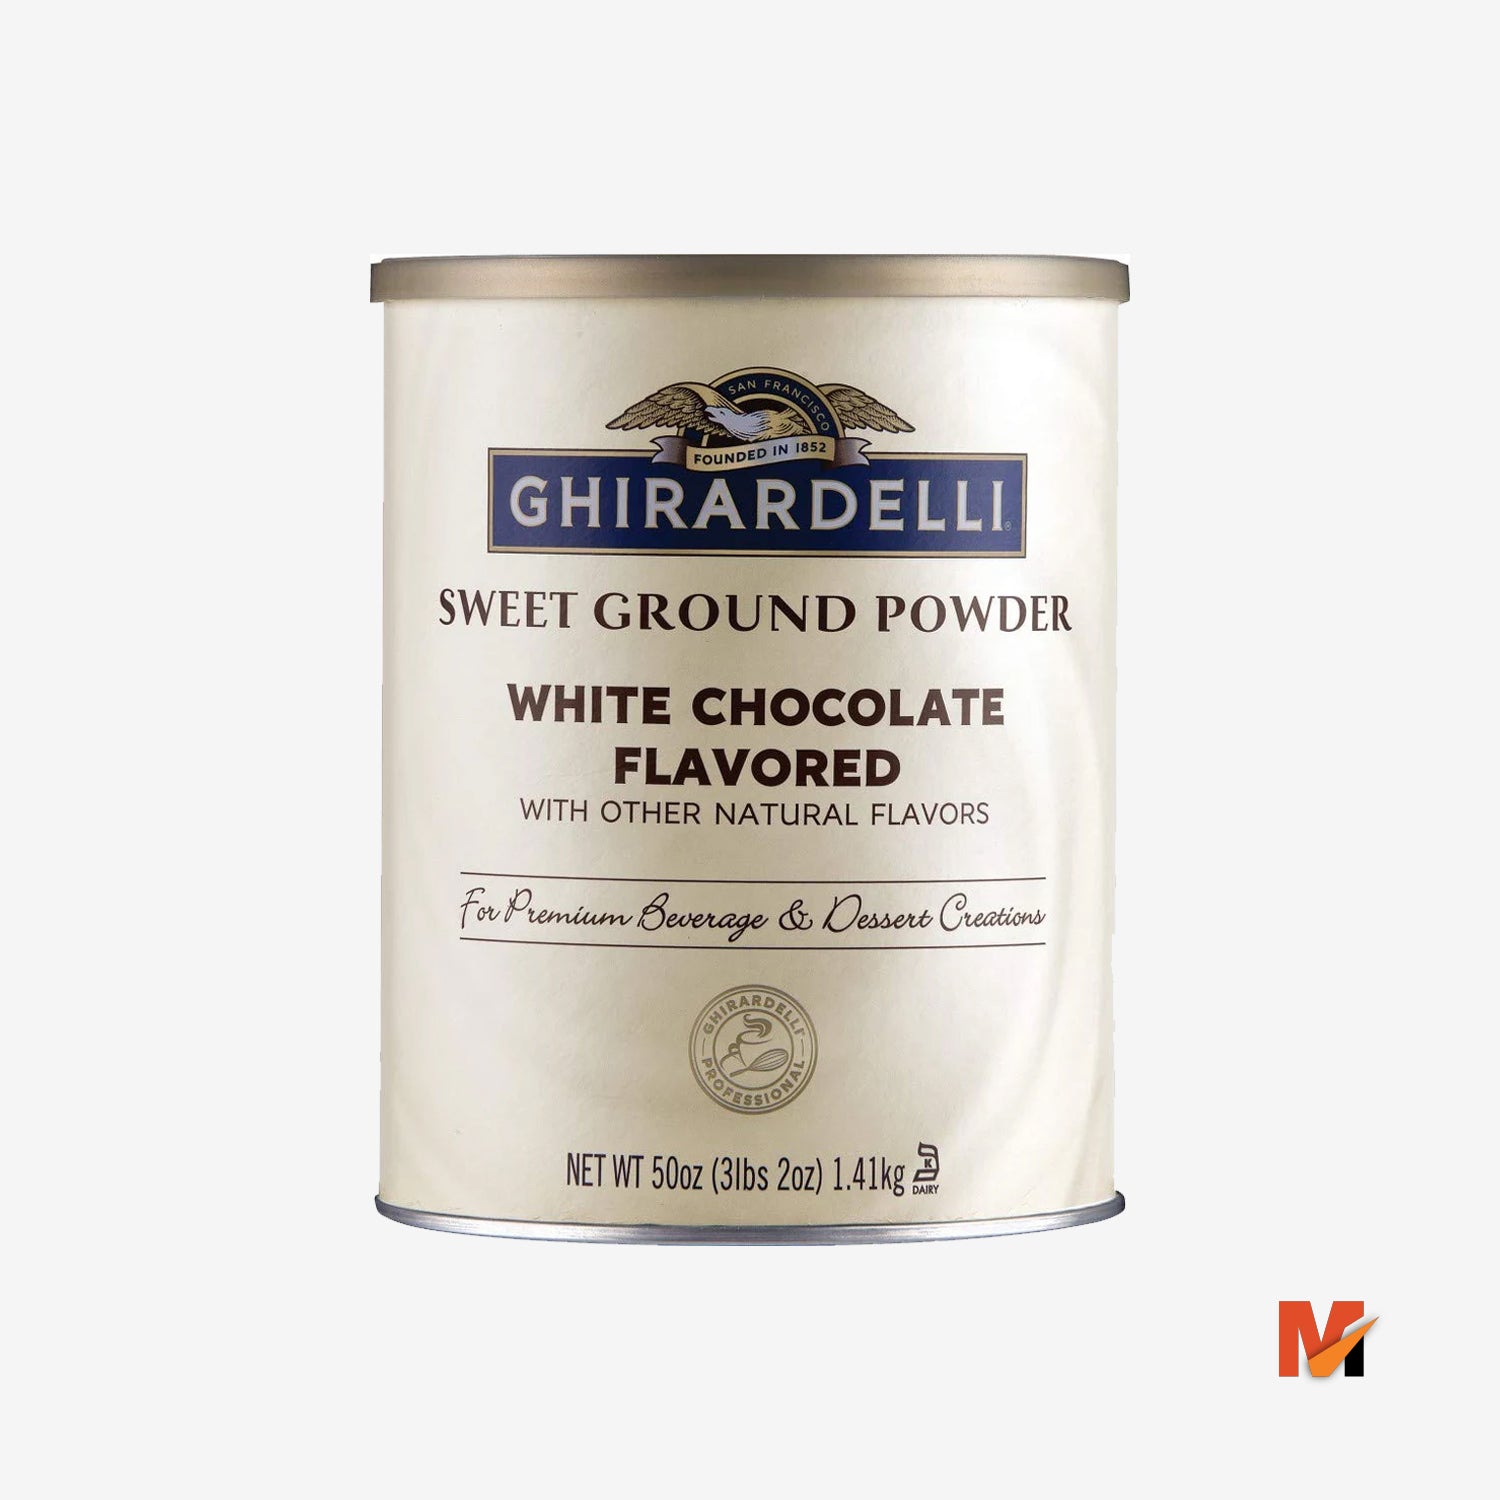 Ghirardelli Sweet Ground White Chocolate Flavor Powder, 3.12 lbs